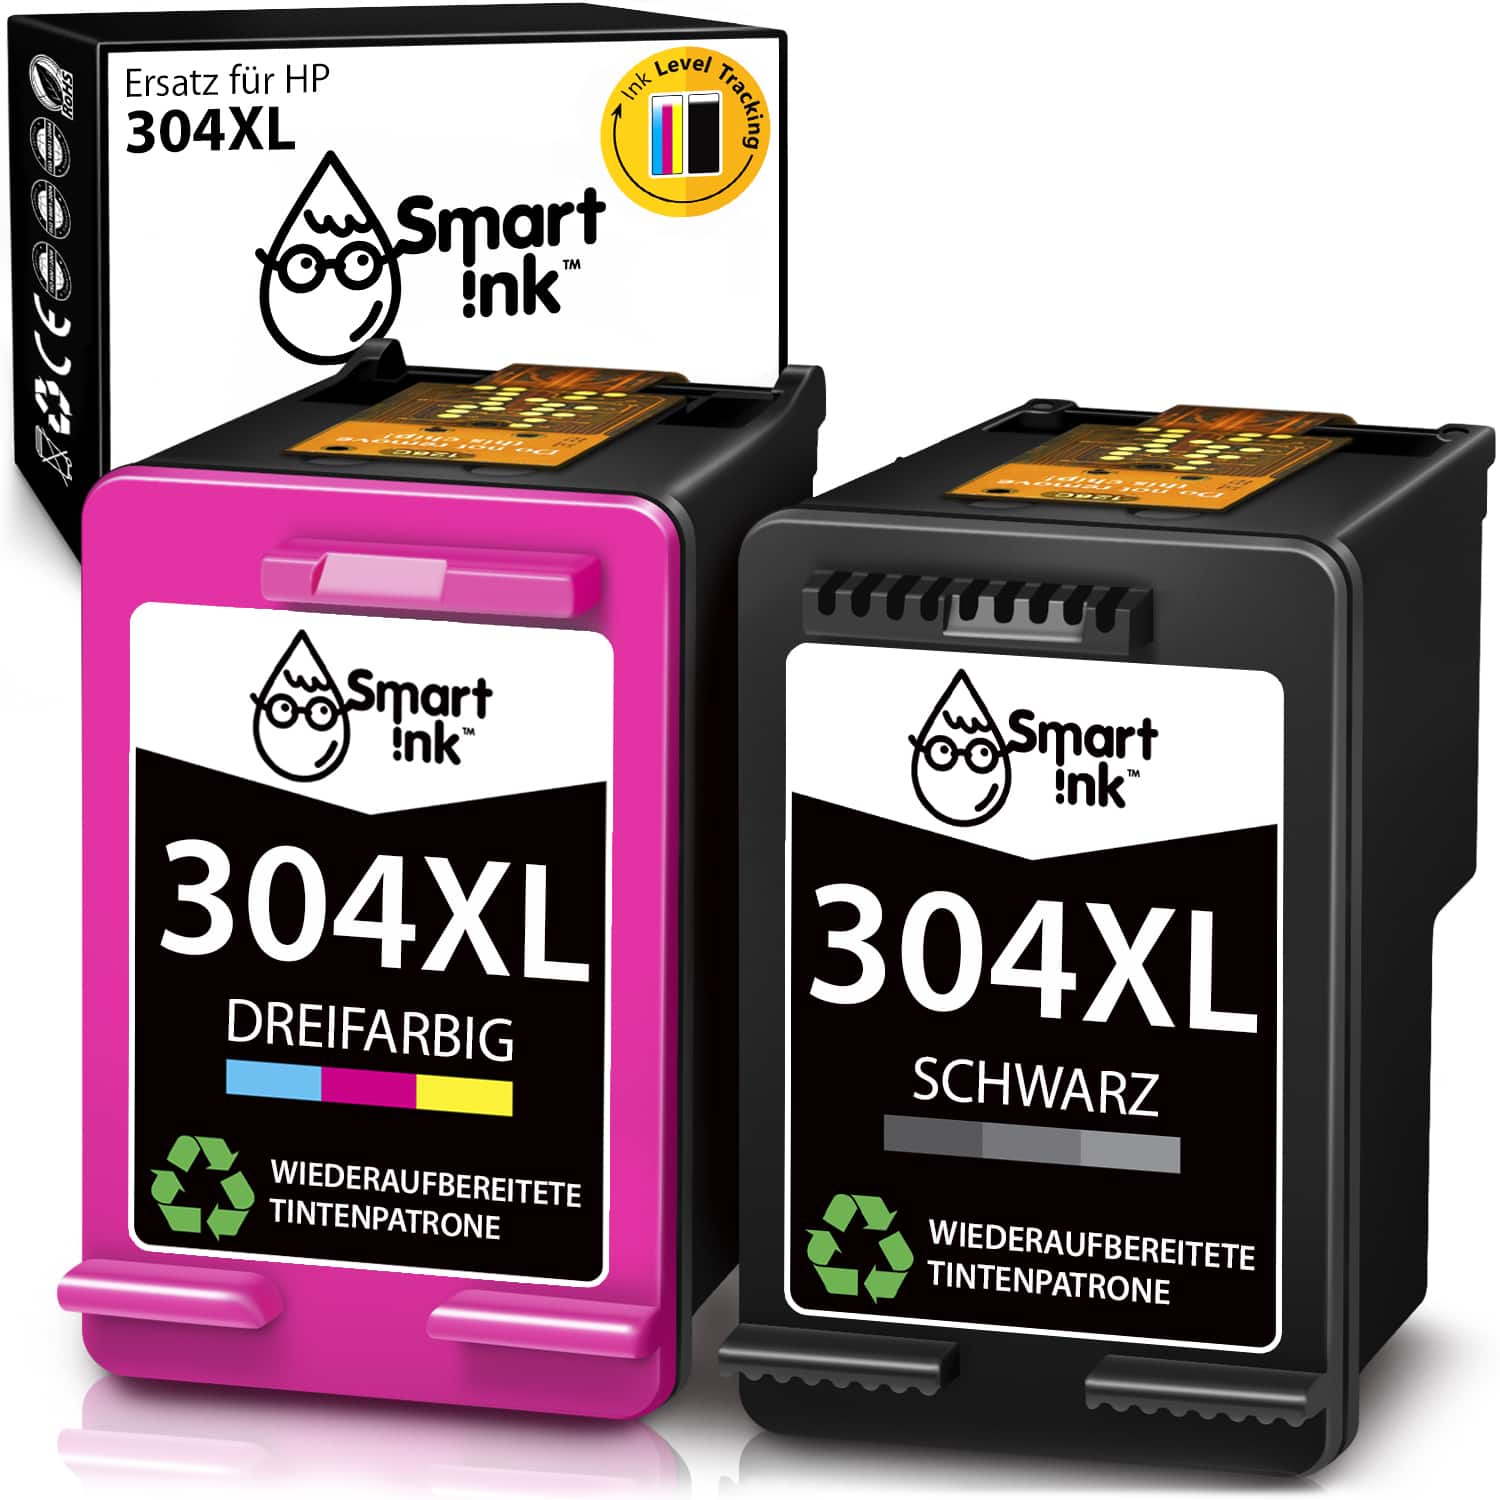 HP 304 XL (2er Pack) Pack) Druckerpatronen (2er - 304XL kaufen kompatible HP Tinten-Druckerpatronen